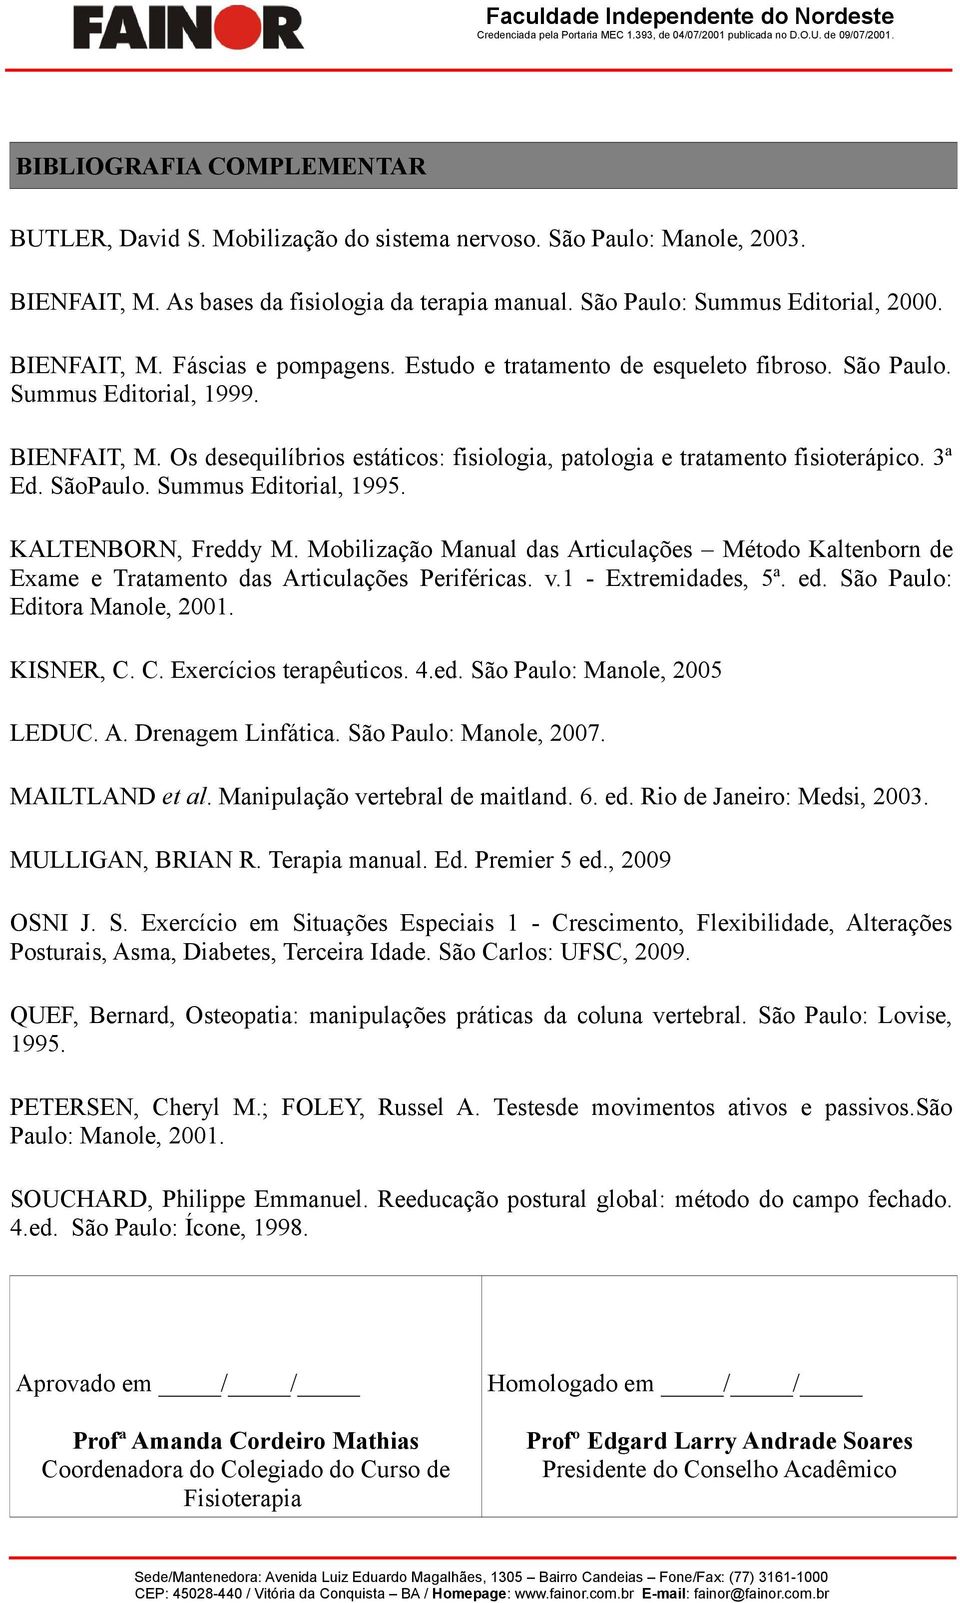 Os desequilíbrios estáticos: fisiologia, patologia e tratamento fisioterápico. 3ª Ed. SãoPaulo. Summus Editorial, 1995. KALTENBORN, Freddy M.